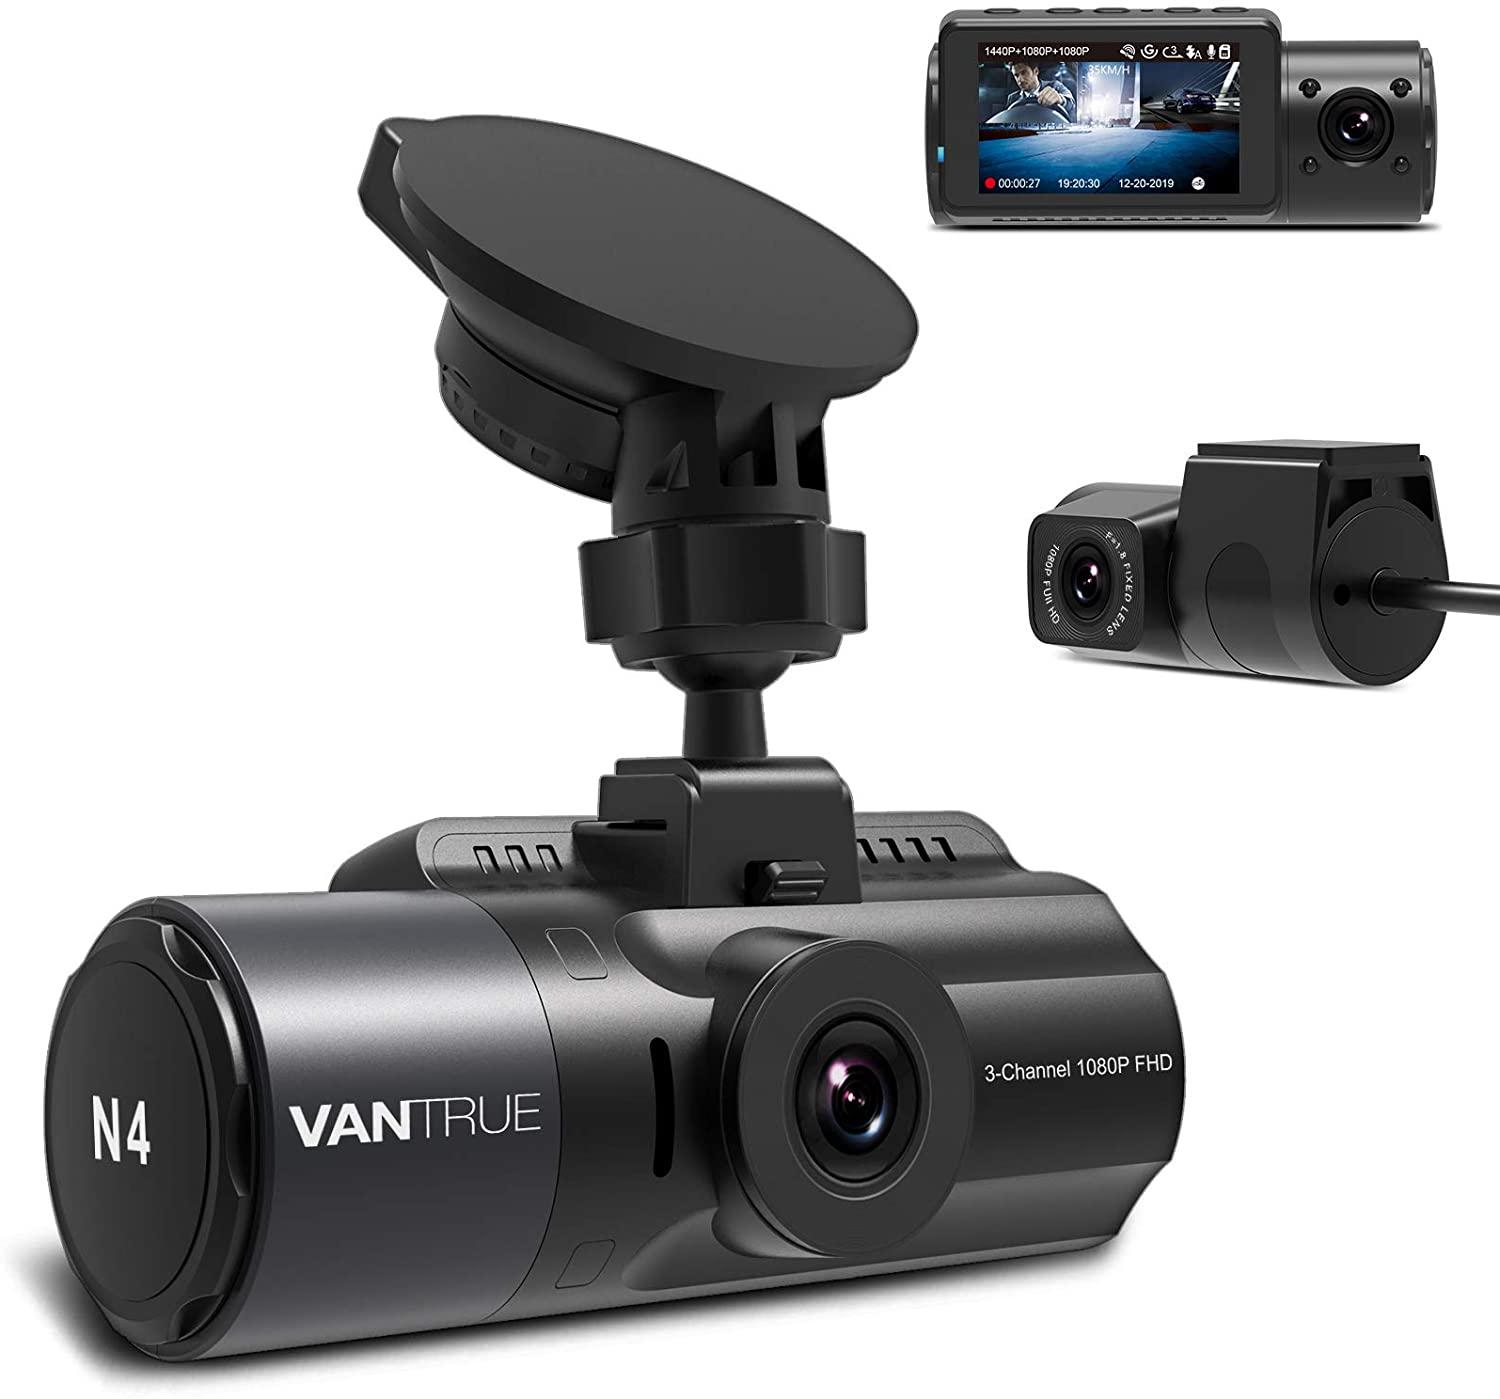 Vantrue N4 3 Channel Dash Cam for $199.99 Shipped